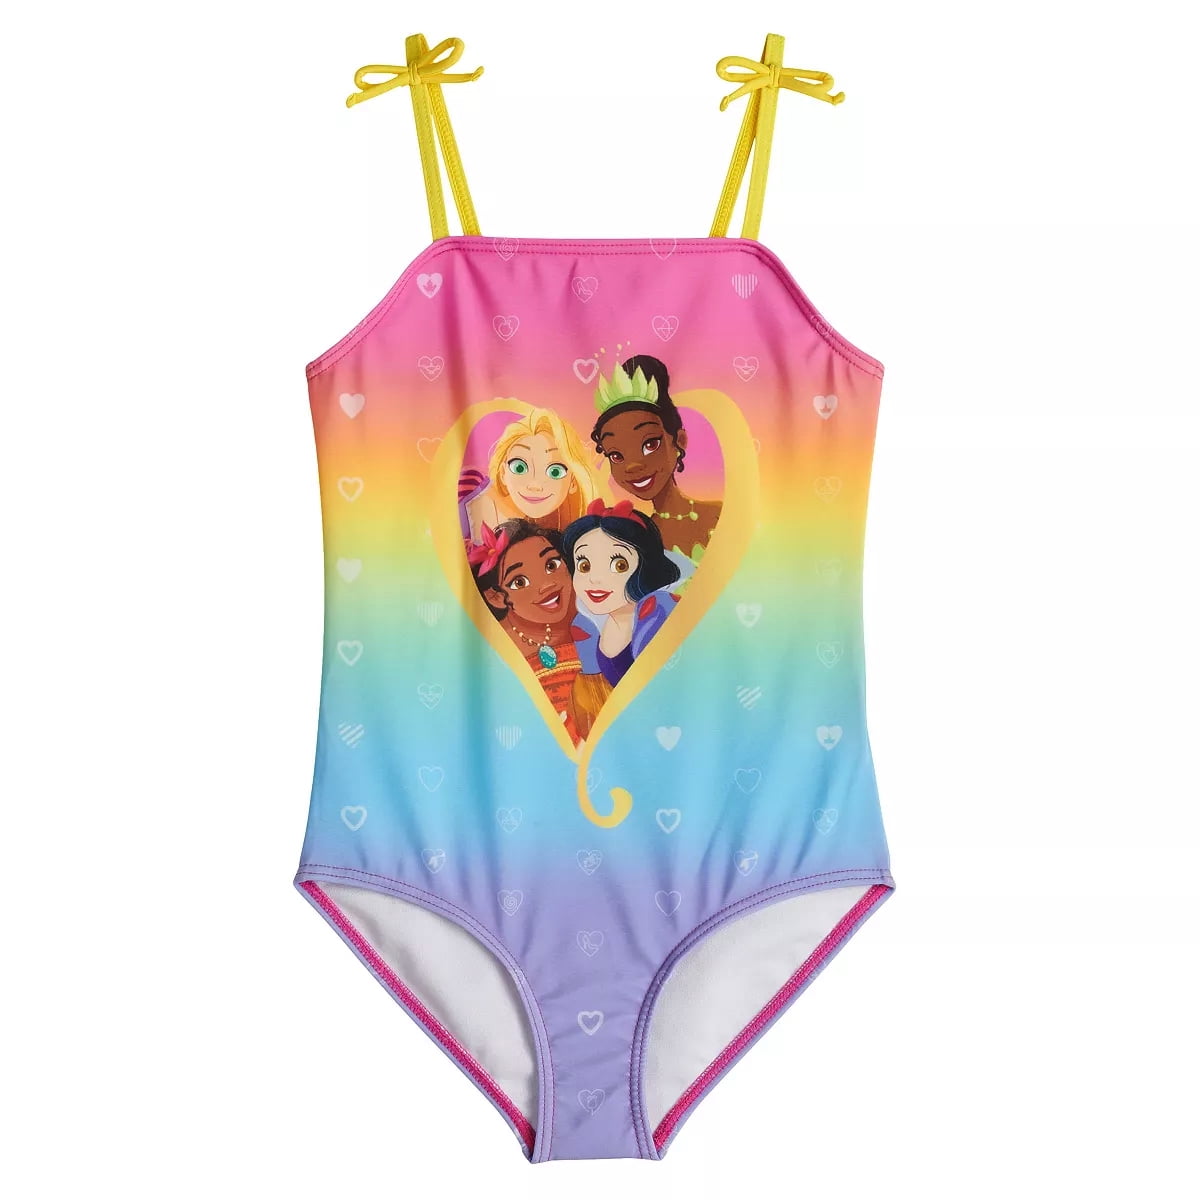 NEW Girls Official Disney Princess Swim Suit Swimming Costume Age 2 3 4 5 6 